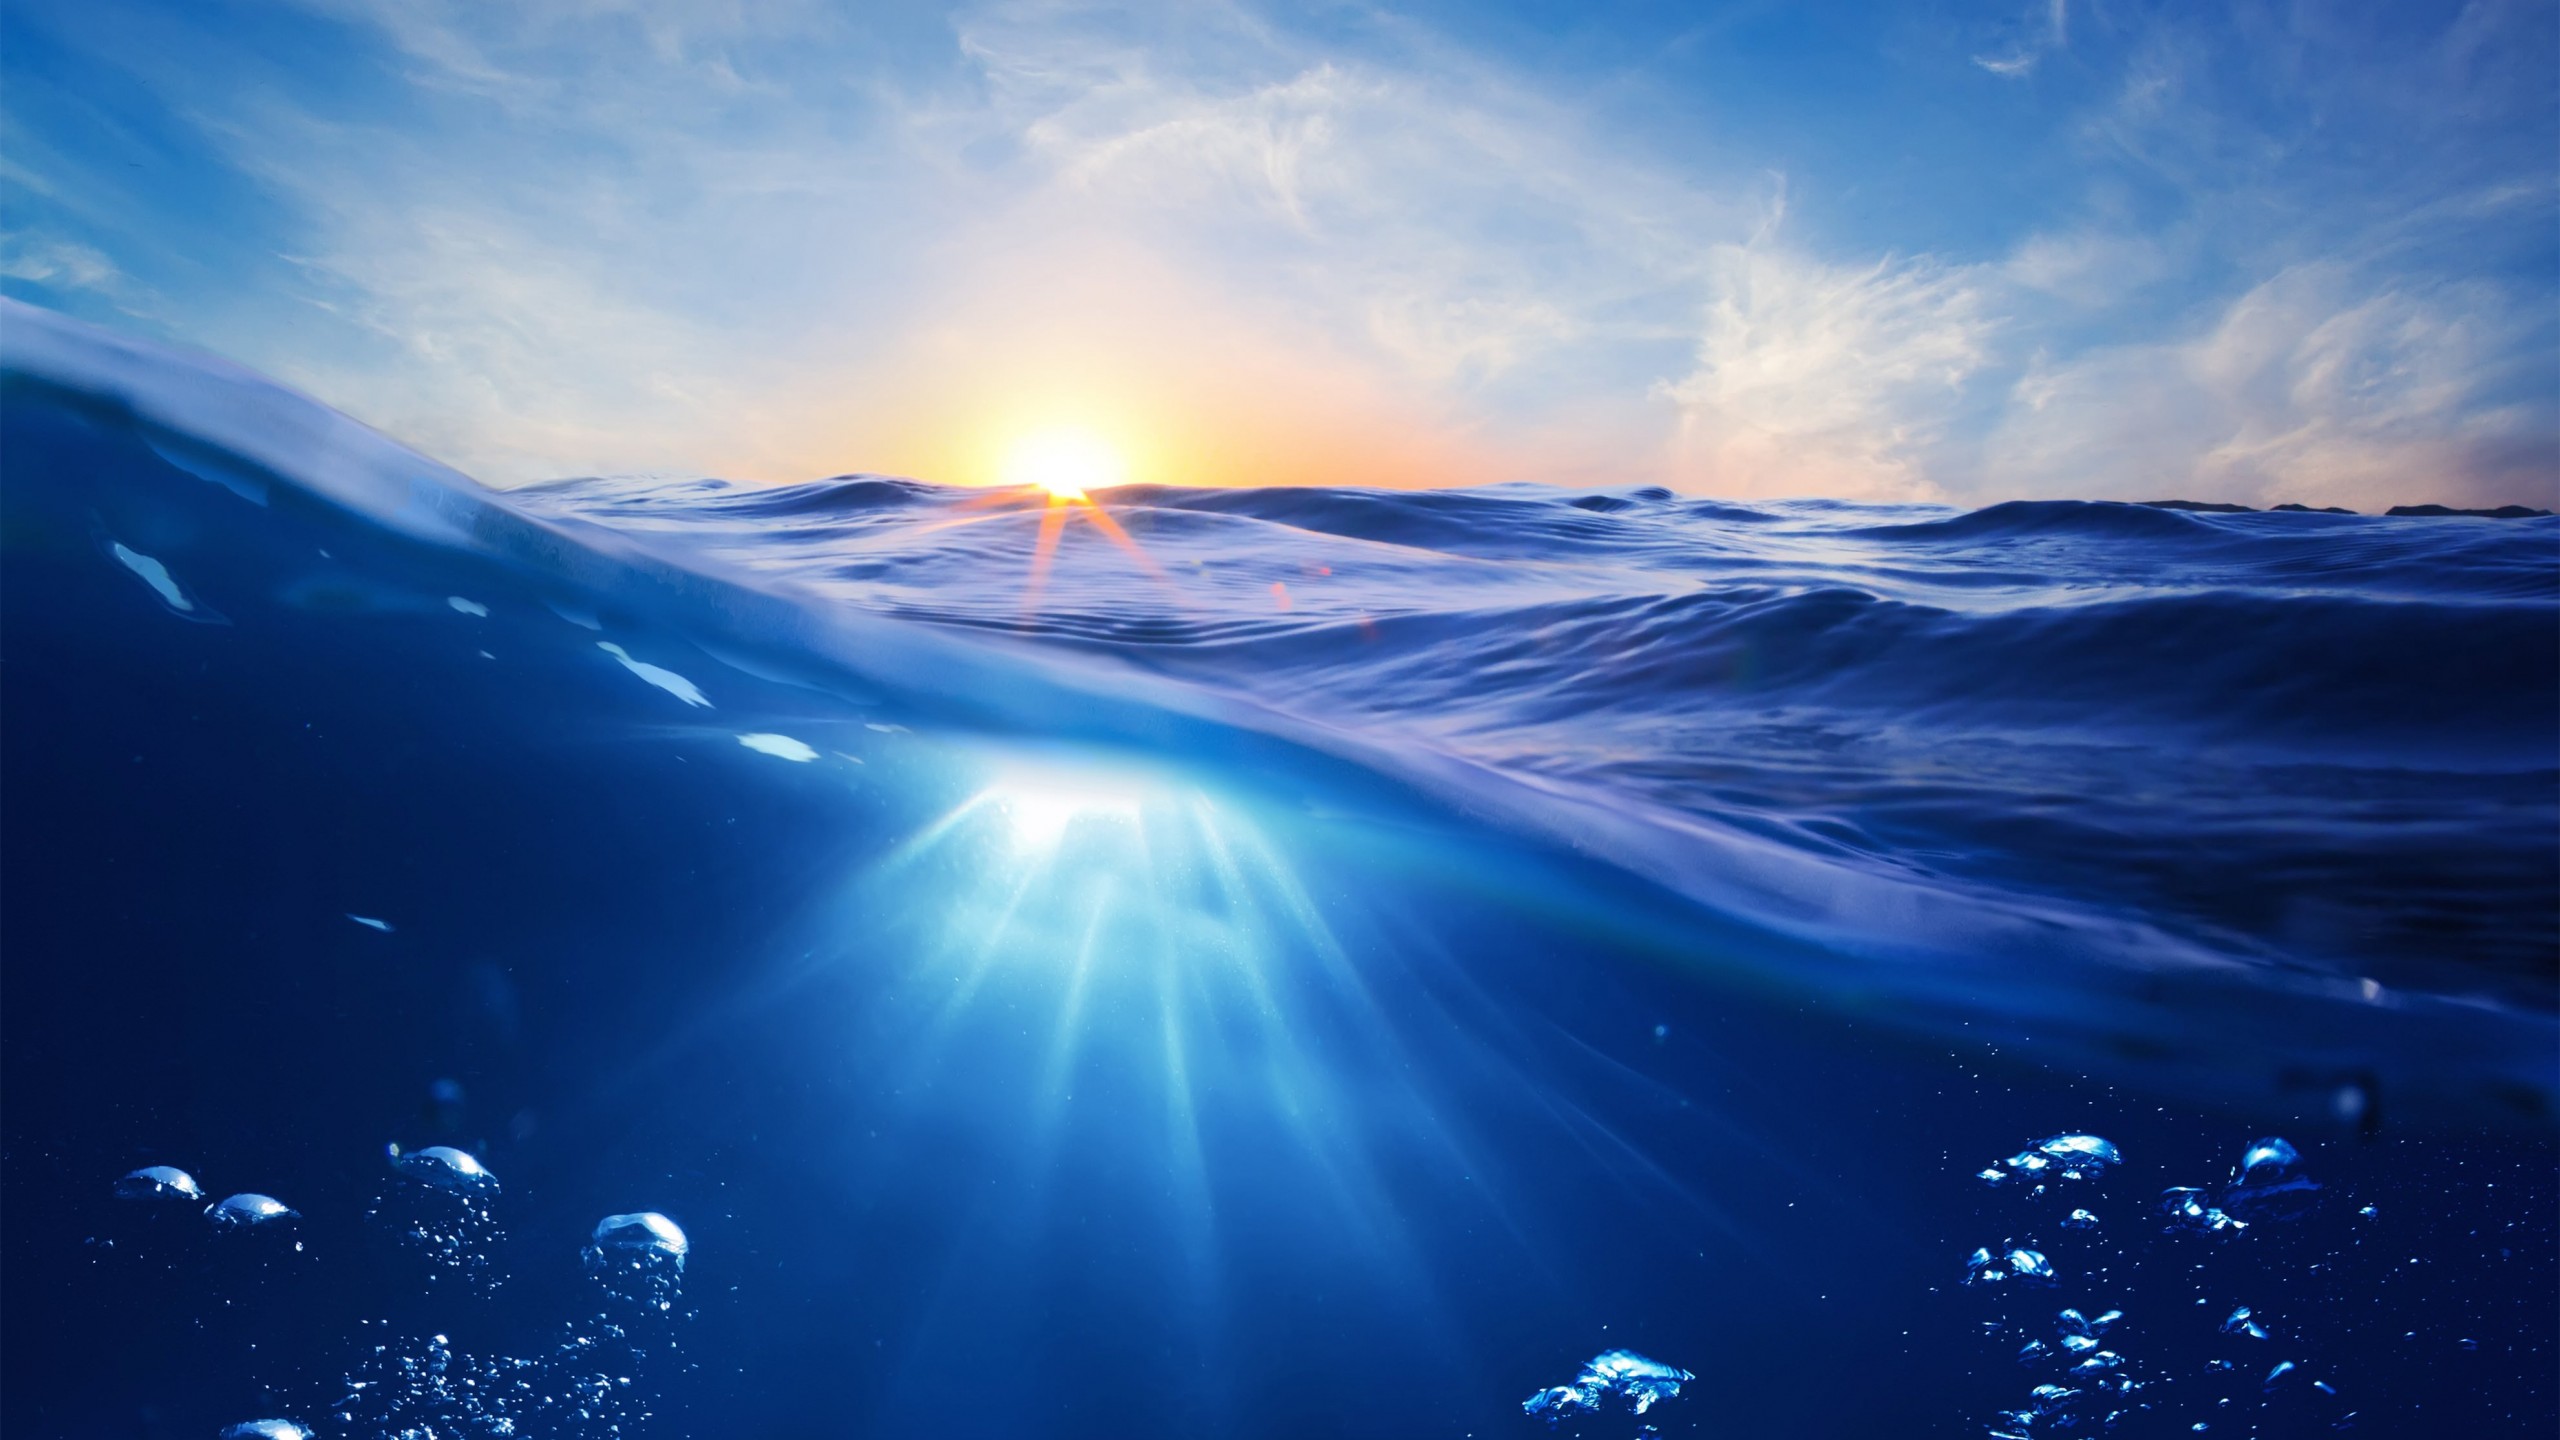 Sunrise Half Underwater Wallpaper for Desktop 2560x1440